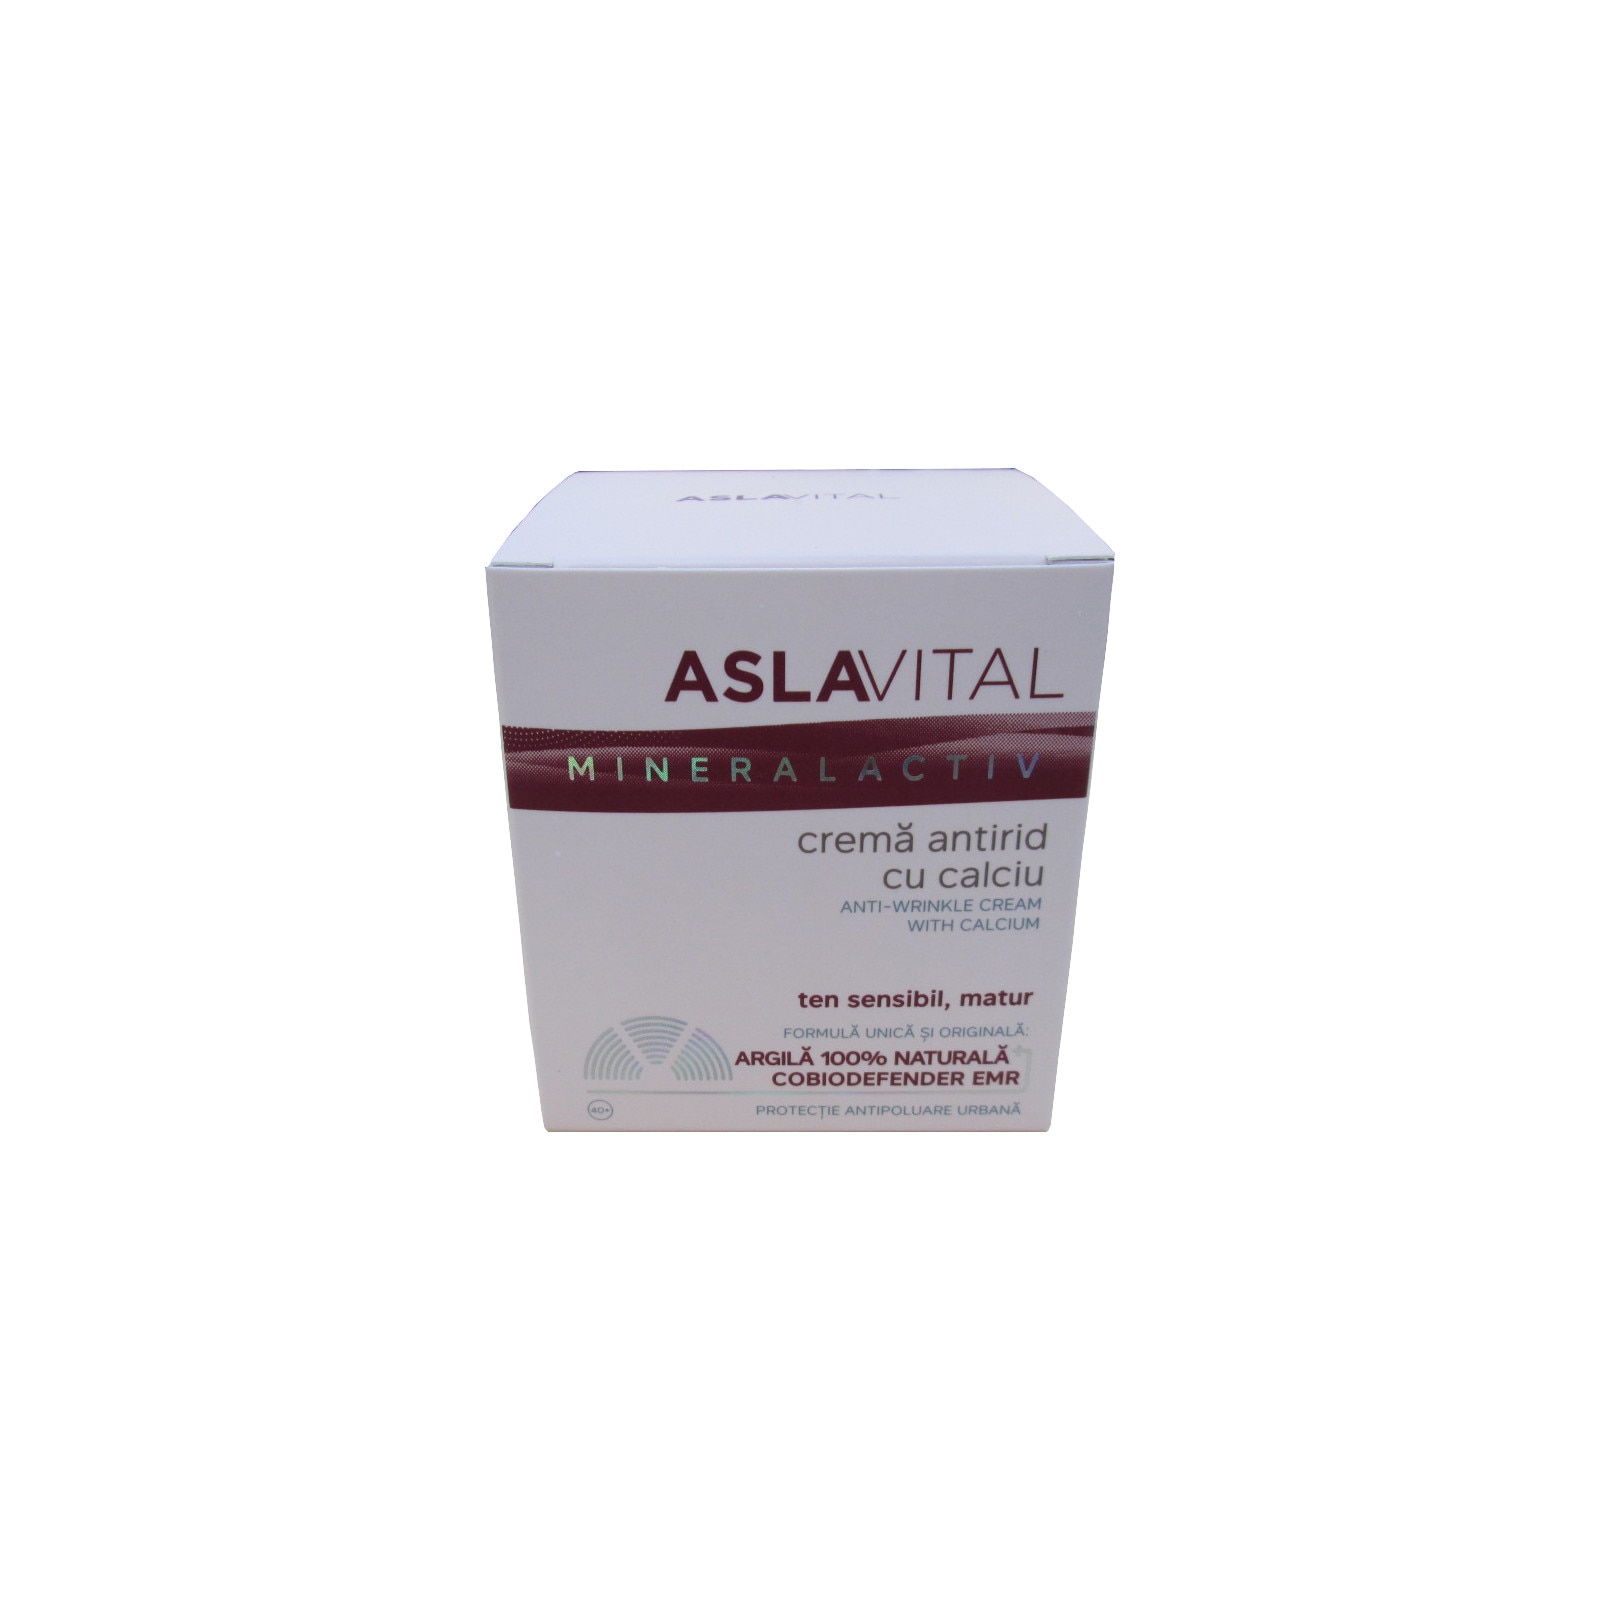 Aslavital MineralActiv Crema Antirid cu Calciu